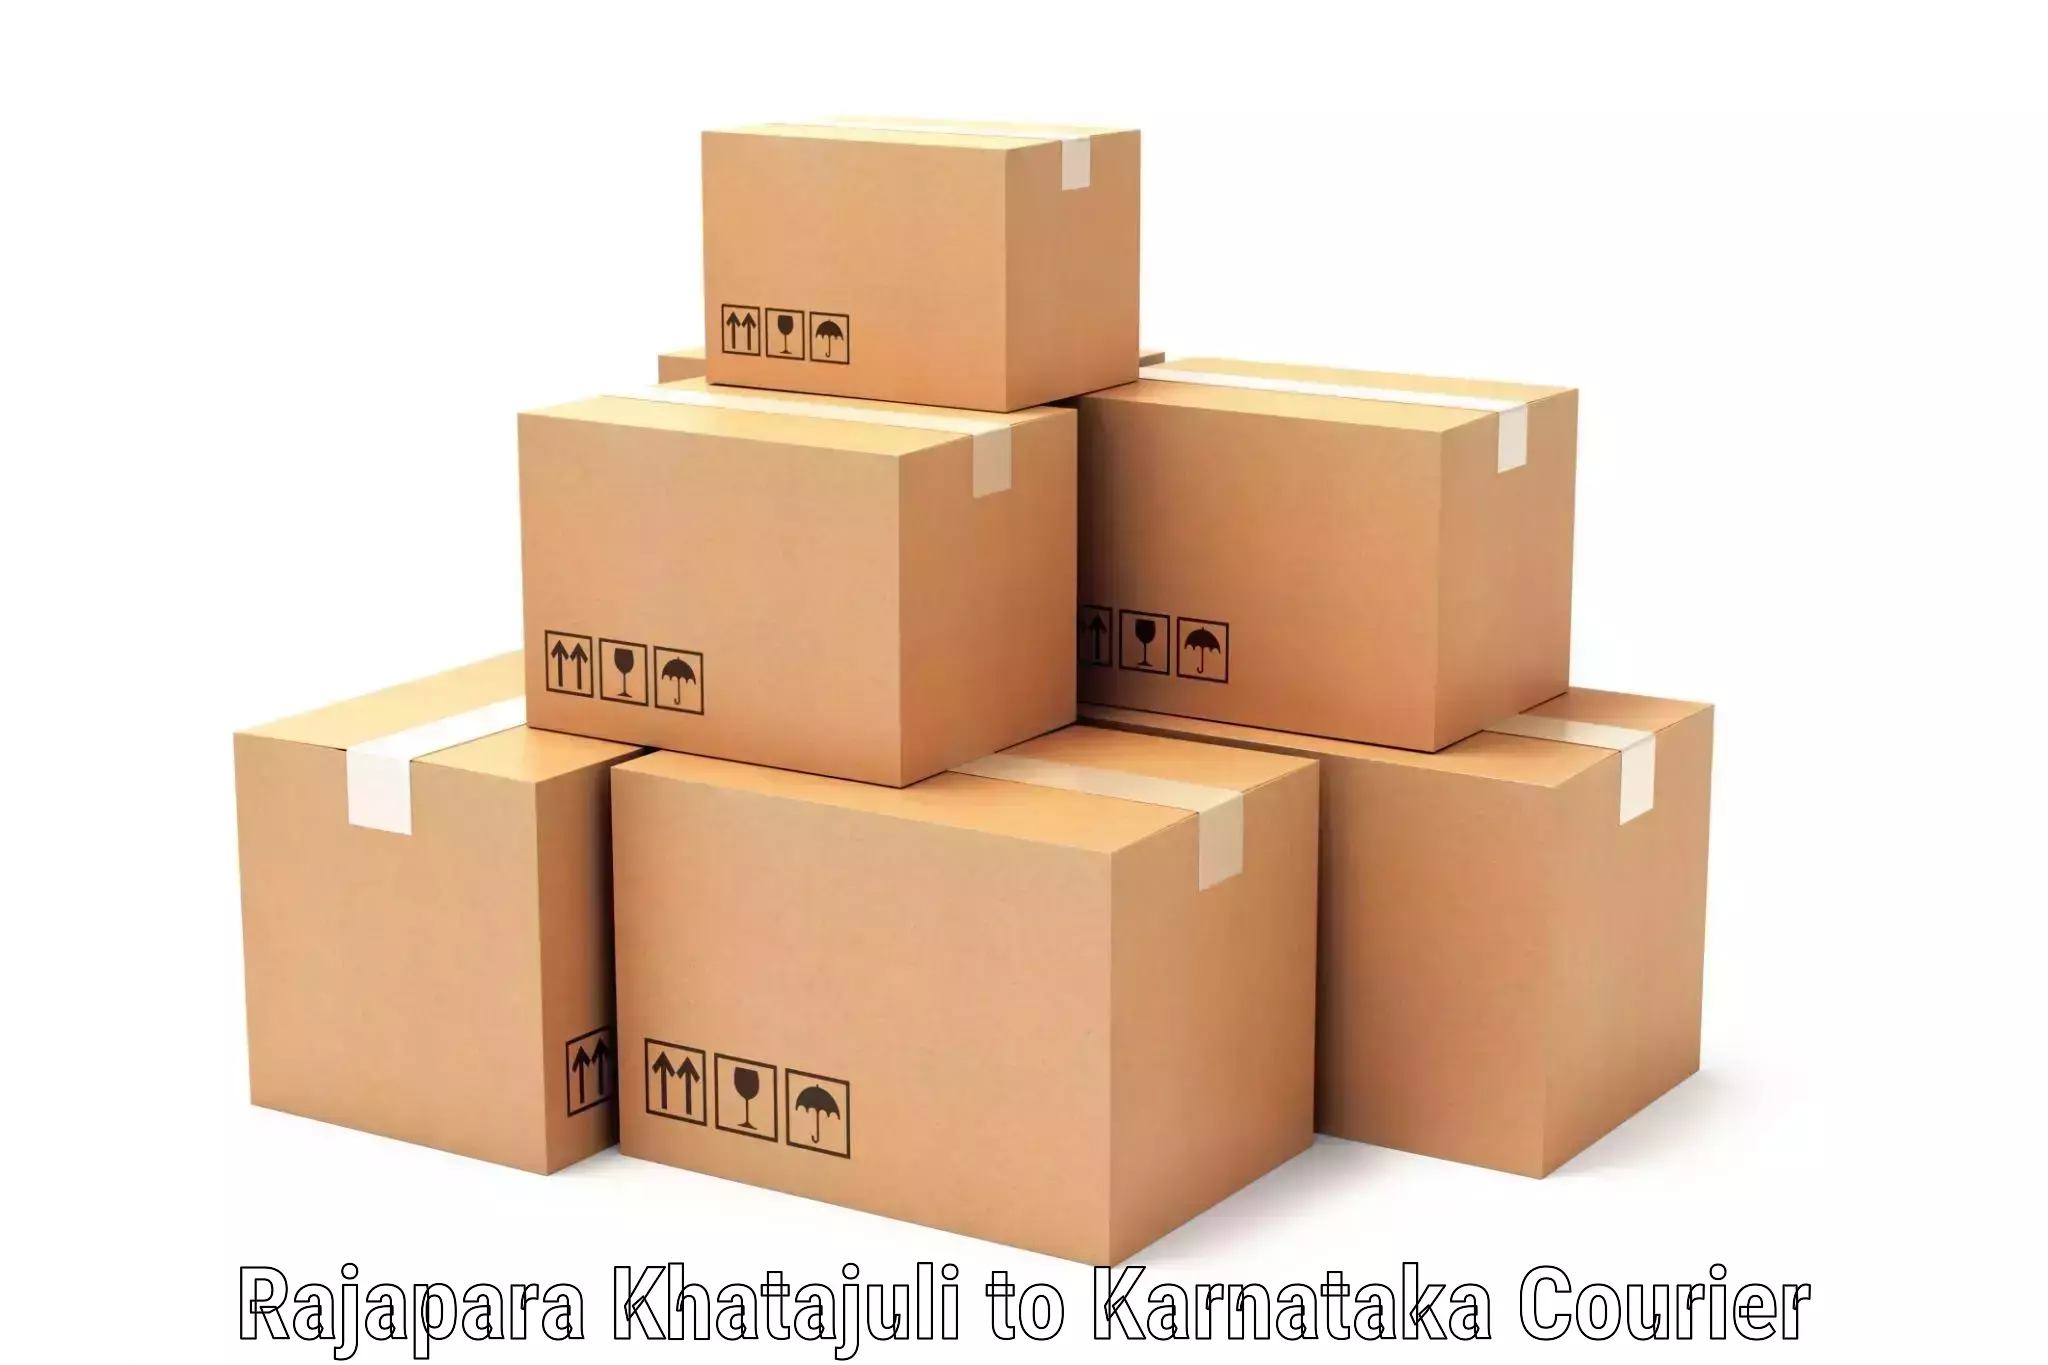 Reliable parcel services Rajapara Khatajuli to Devanahalli